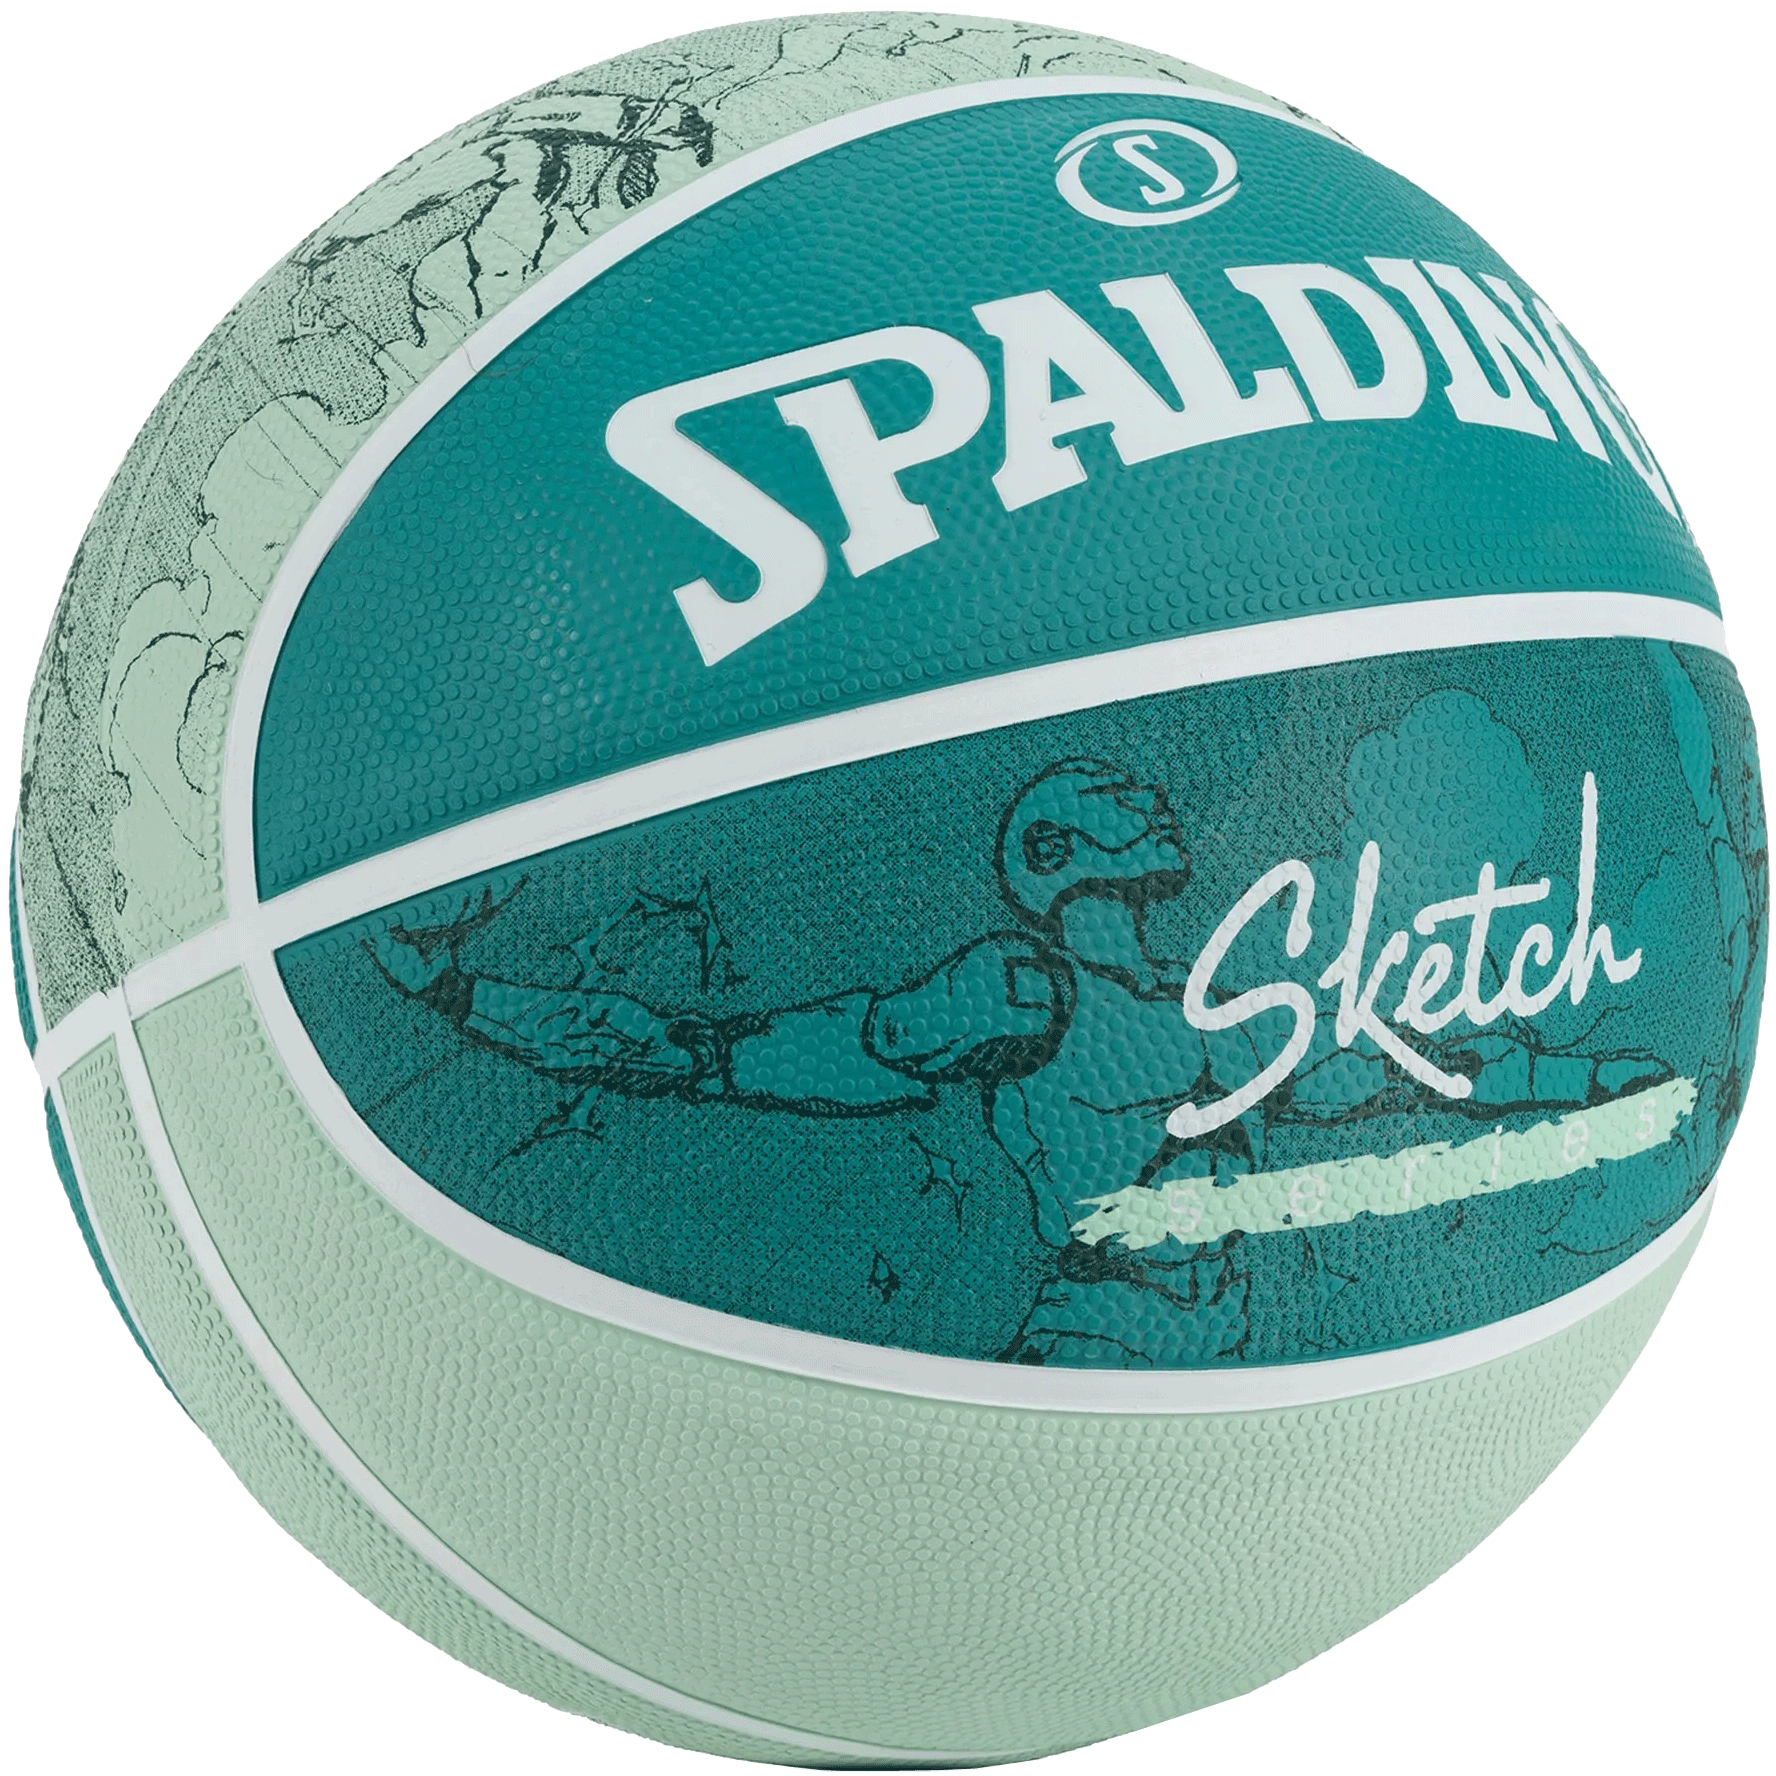 Ballons de basket Sketch Crack